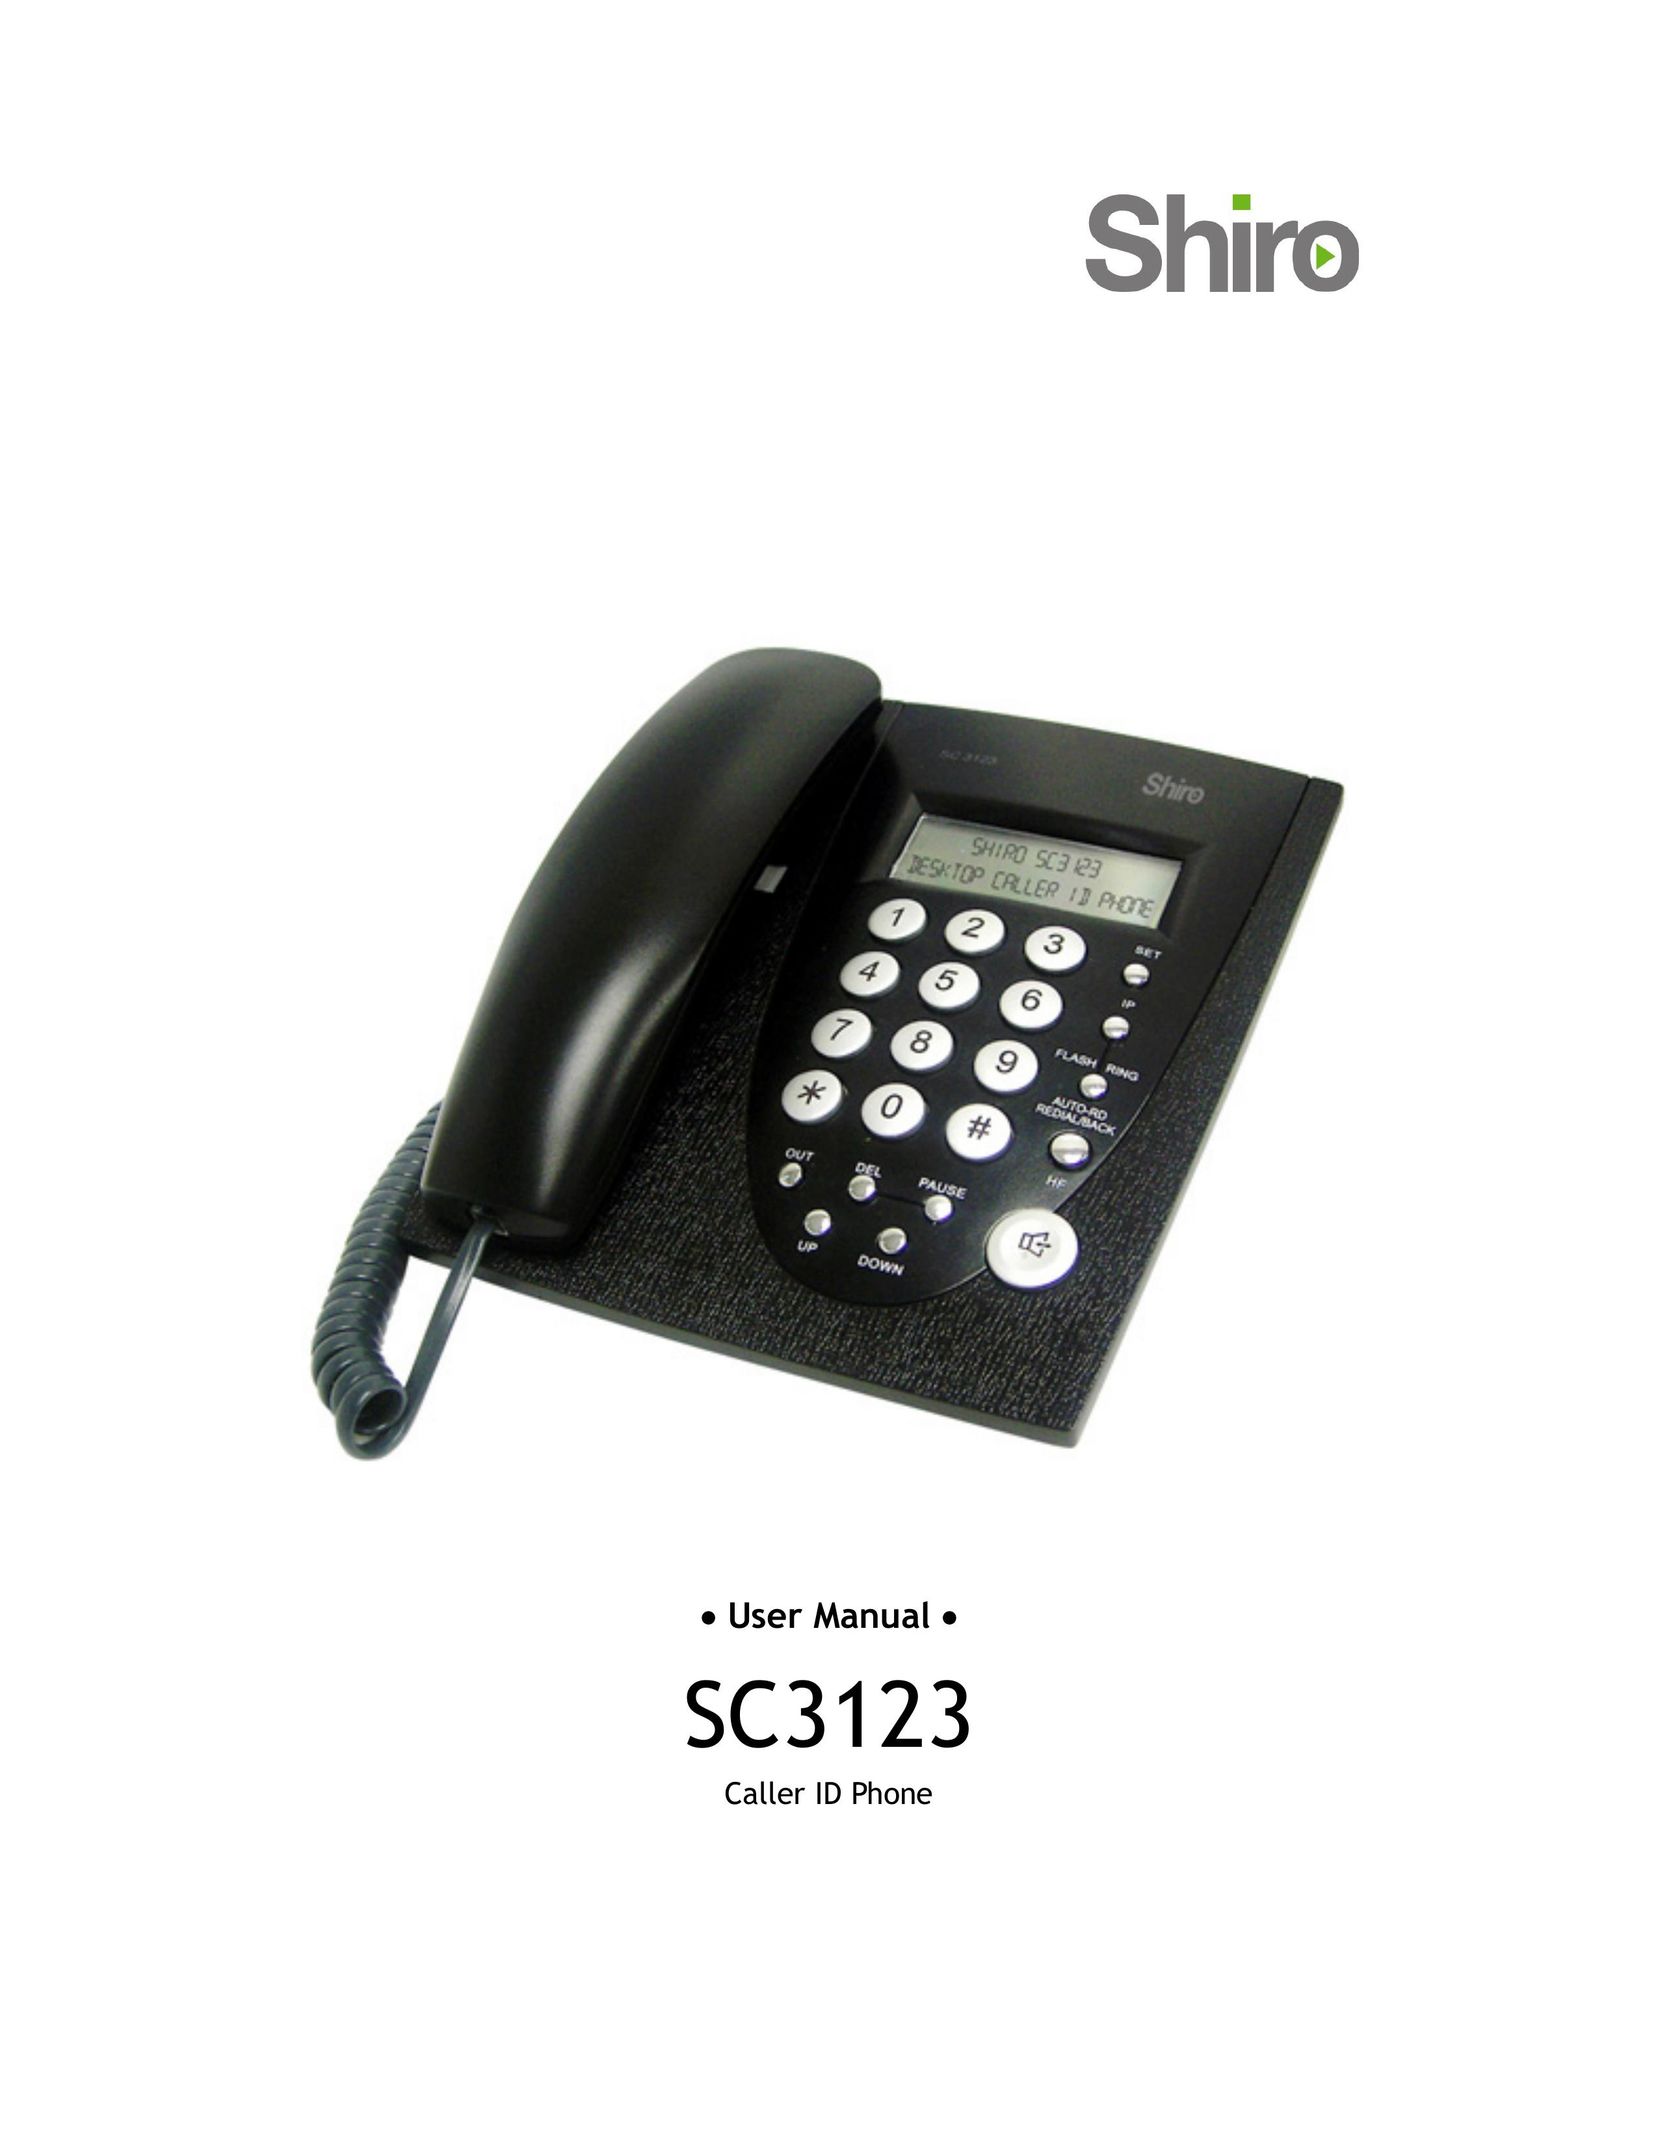 Shiro SC3123 Telephone User Manual